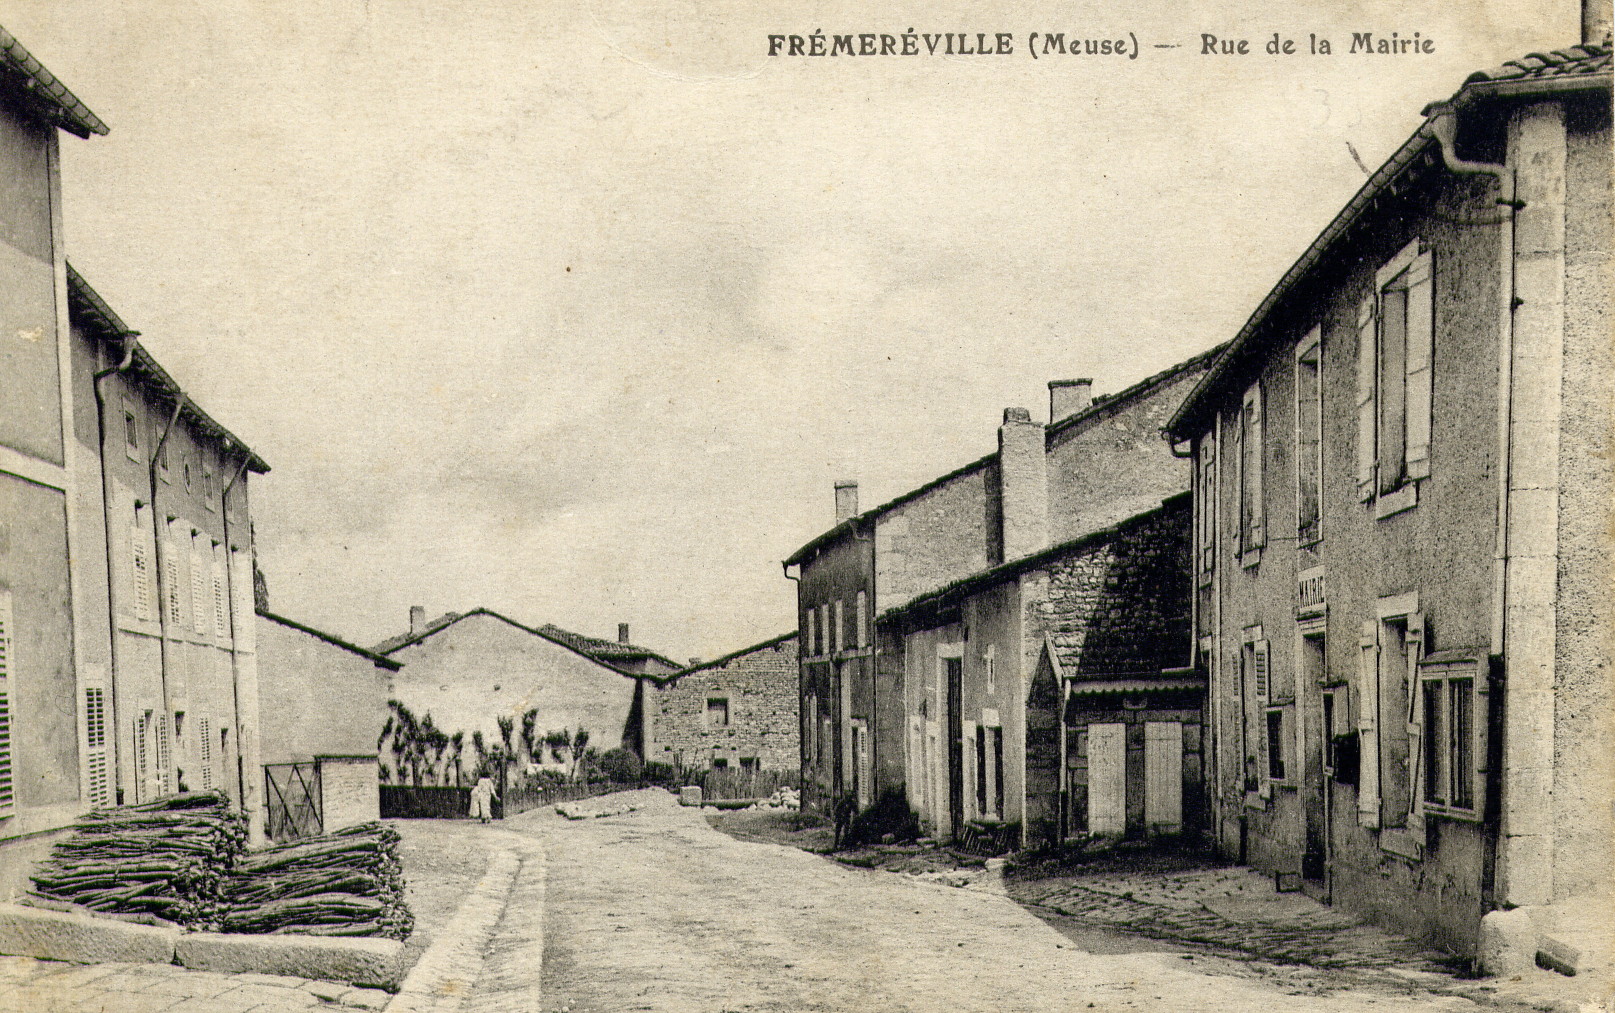 Frmerville